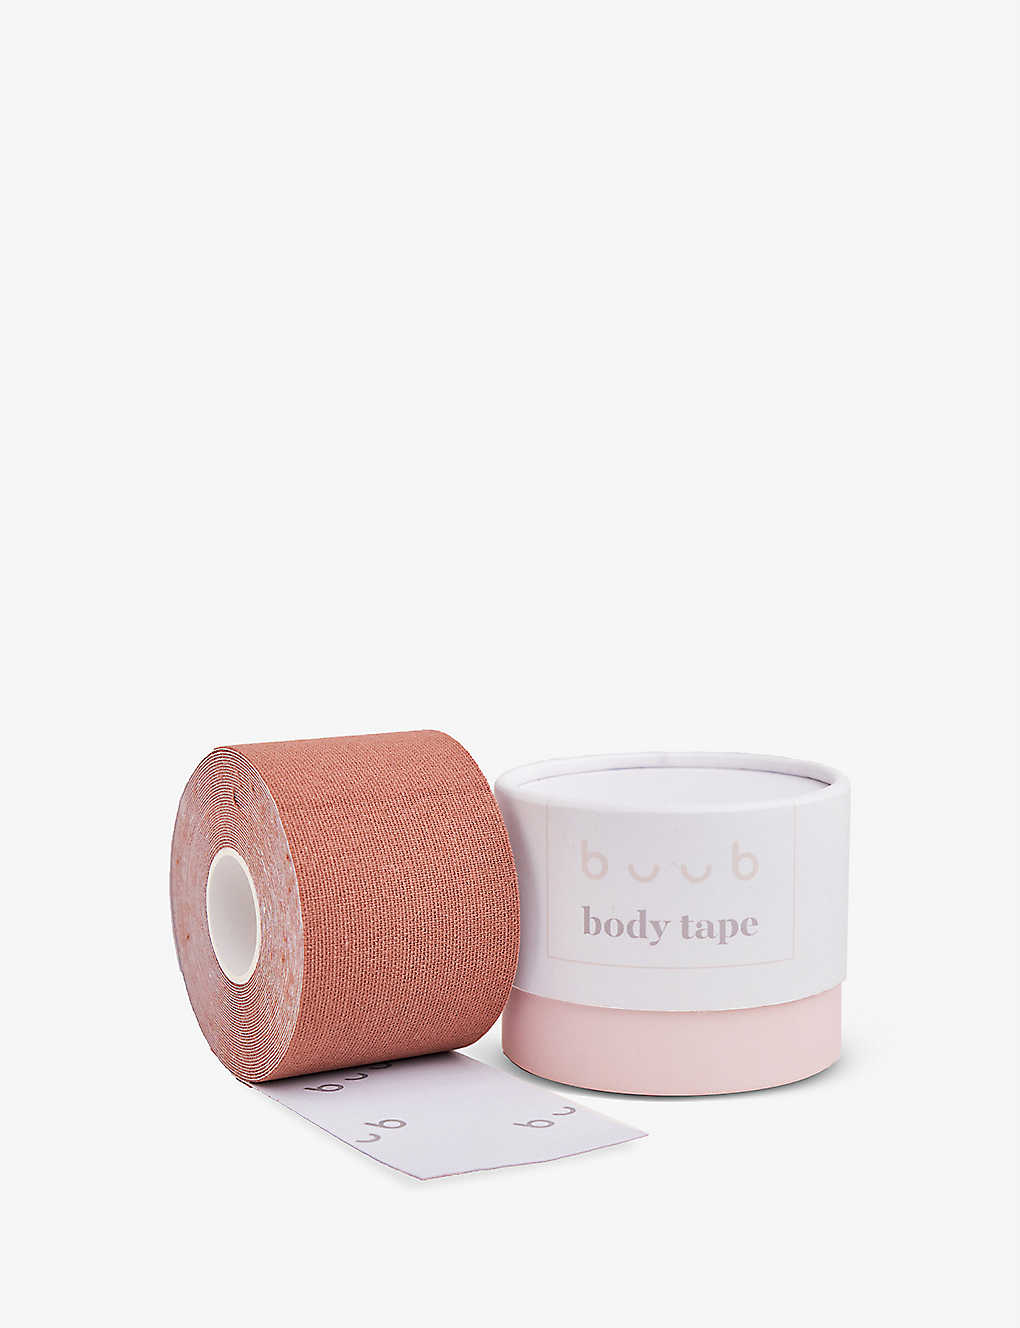 Buub Classic A-c Cup Adhesive Body Tape In Tan